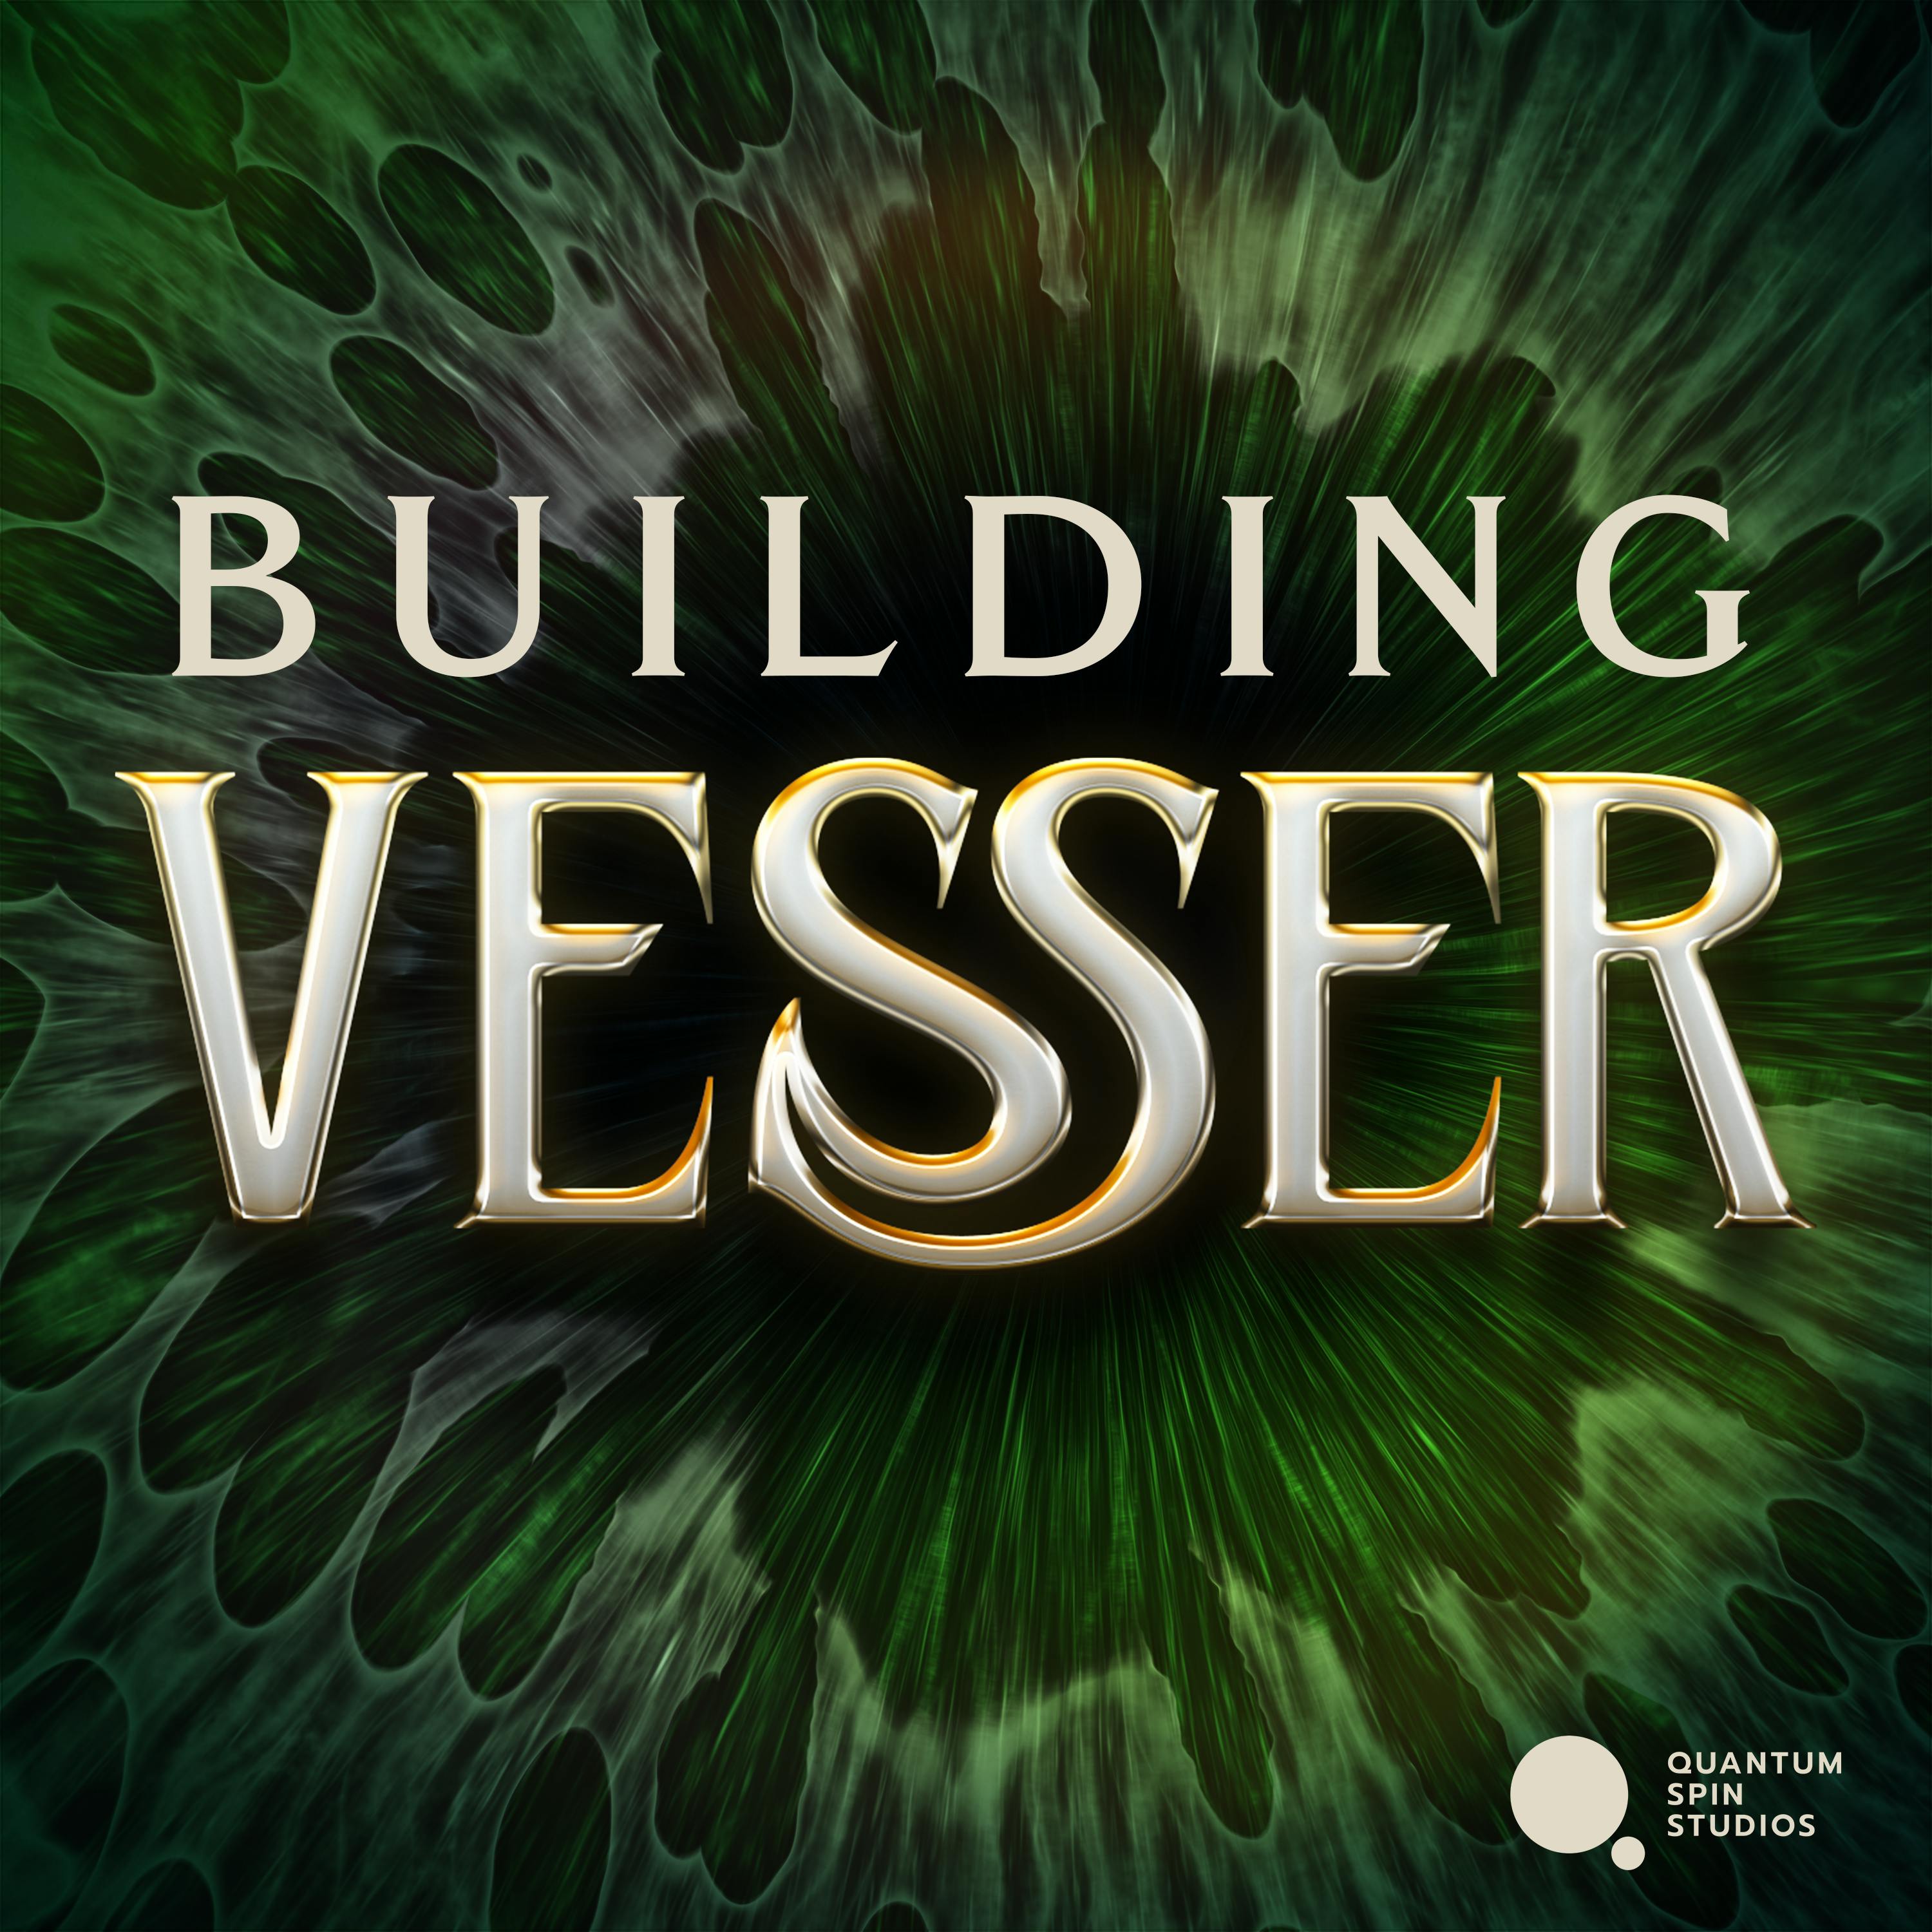 Building Vesser: Hello World (of Vesser)